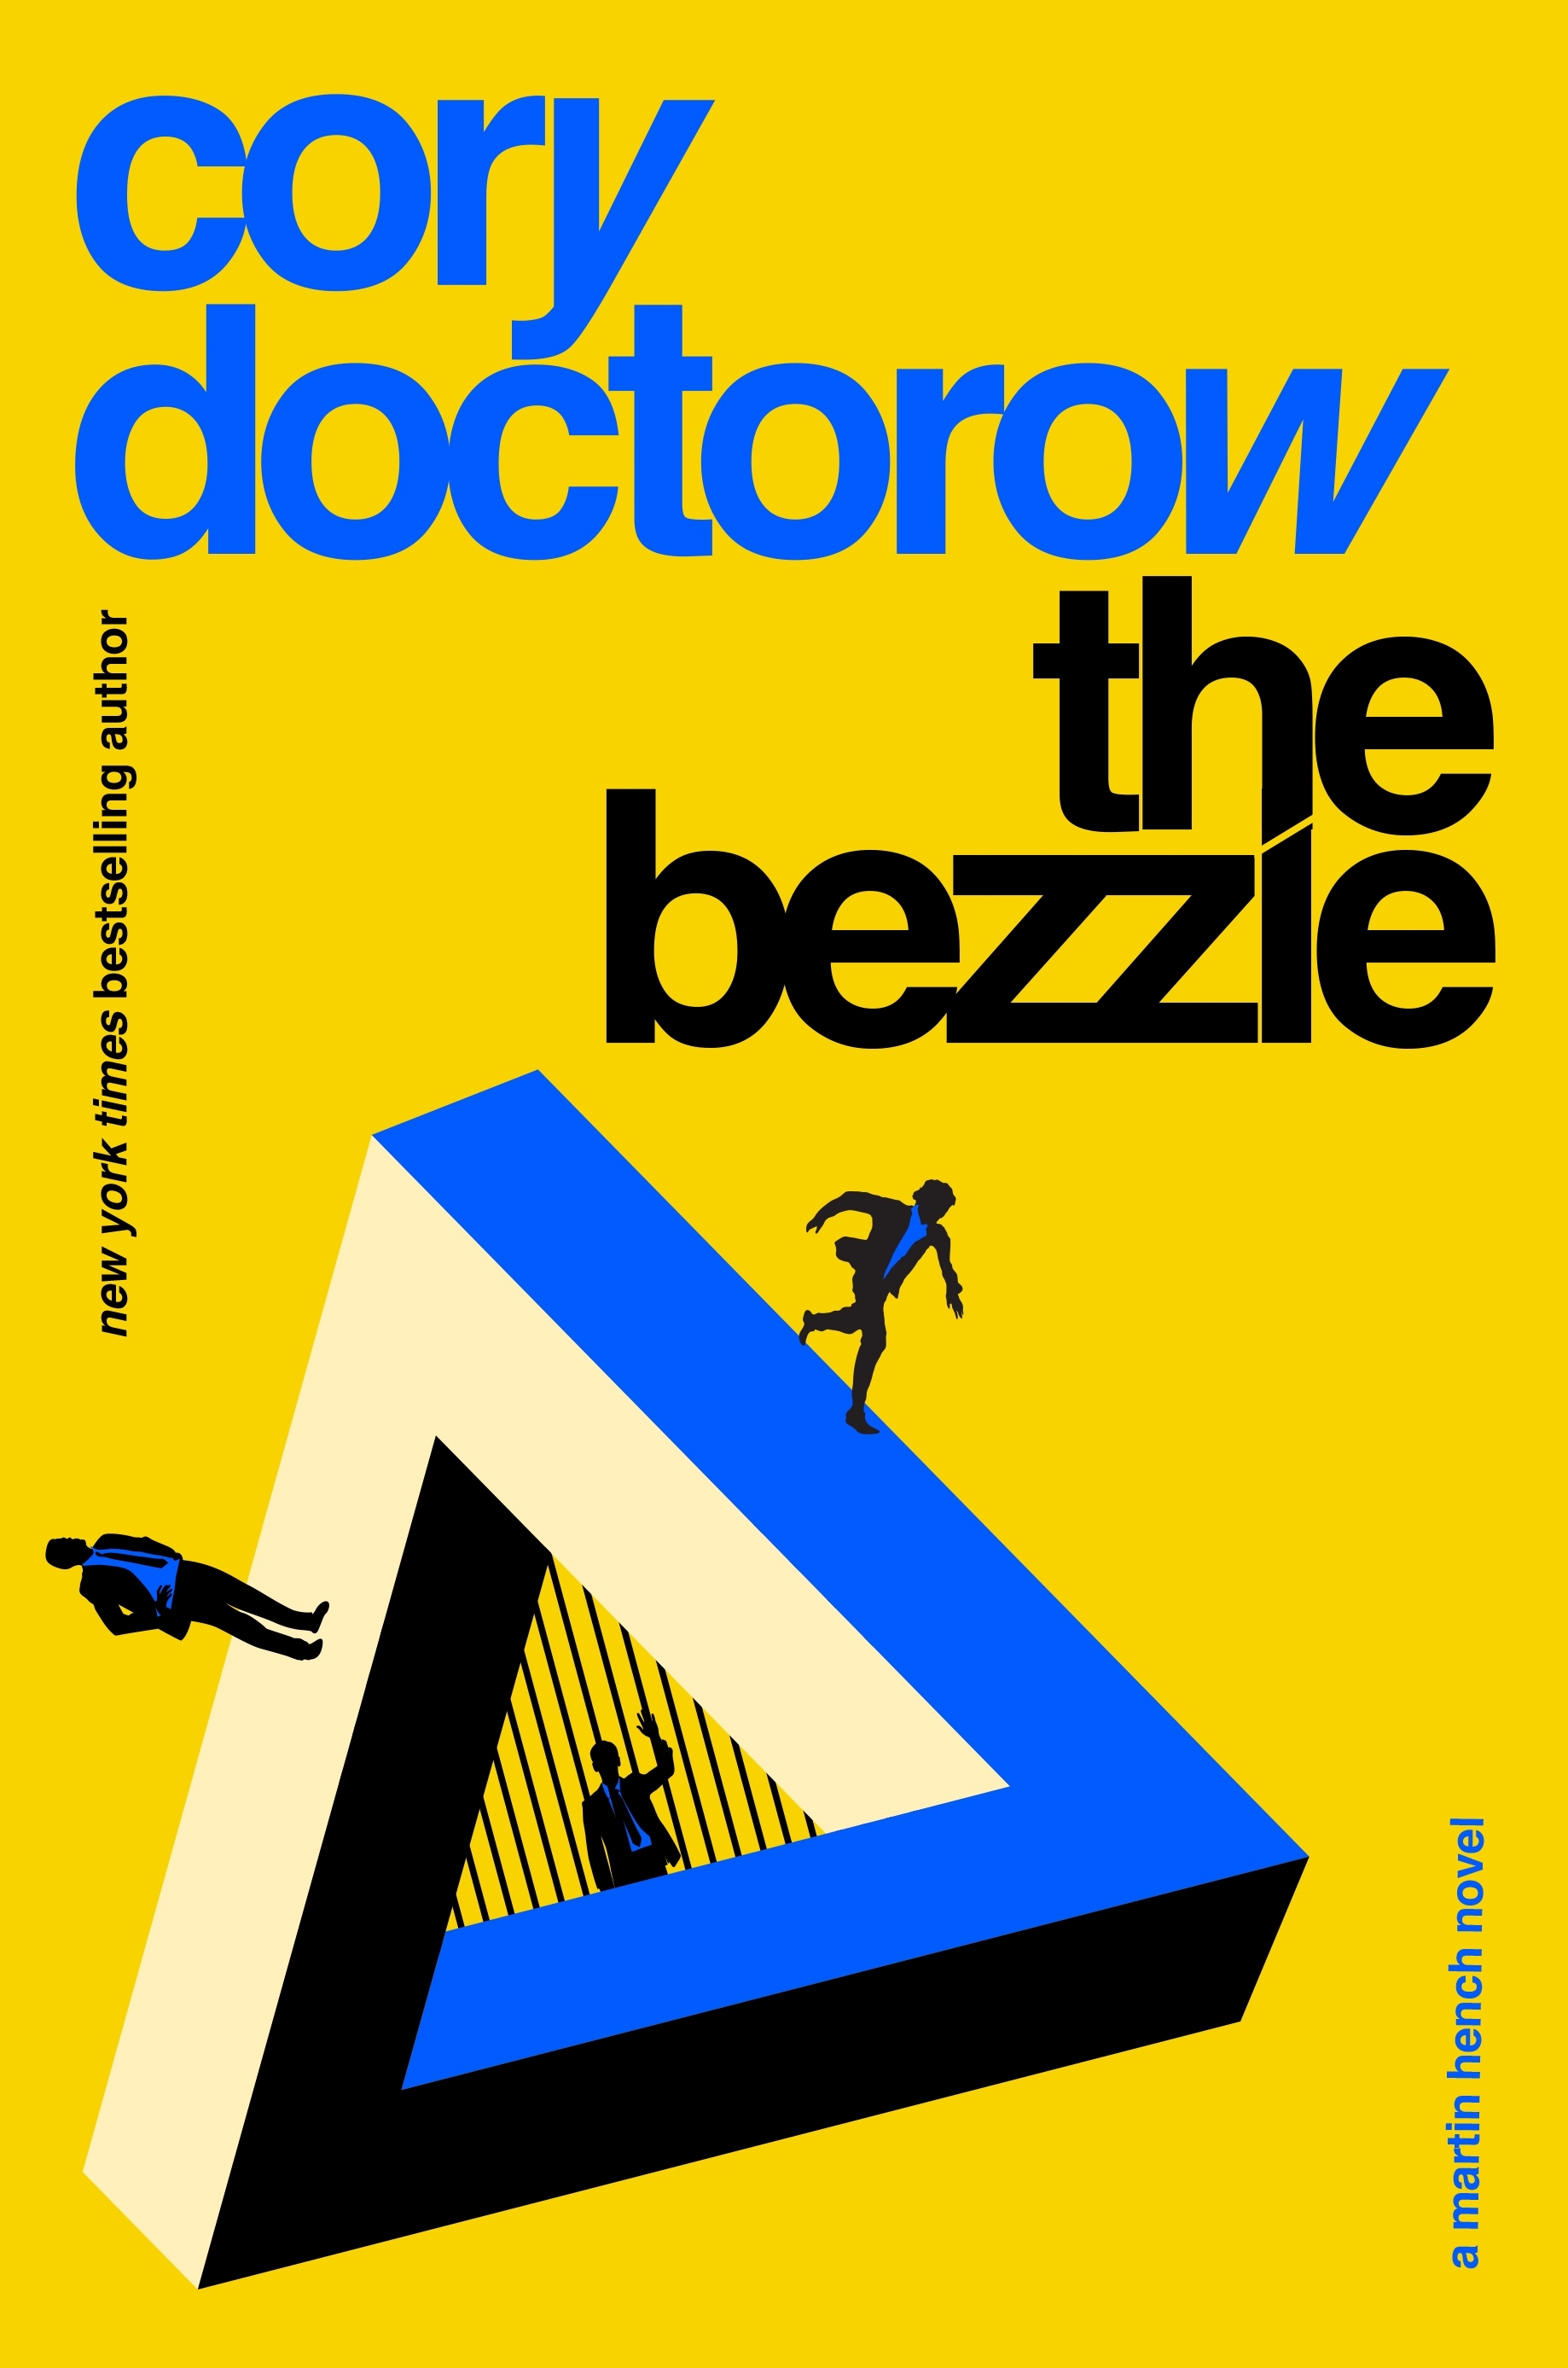 The Bezzle : A Martin Hench Novel by Cory Doctorow